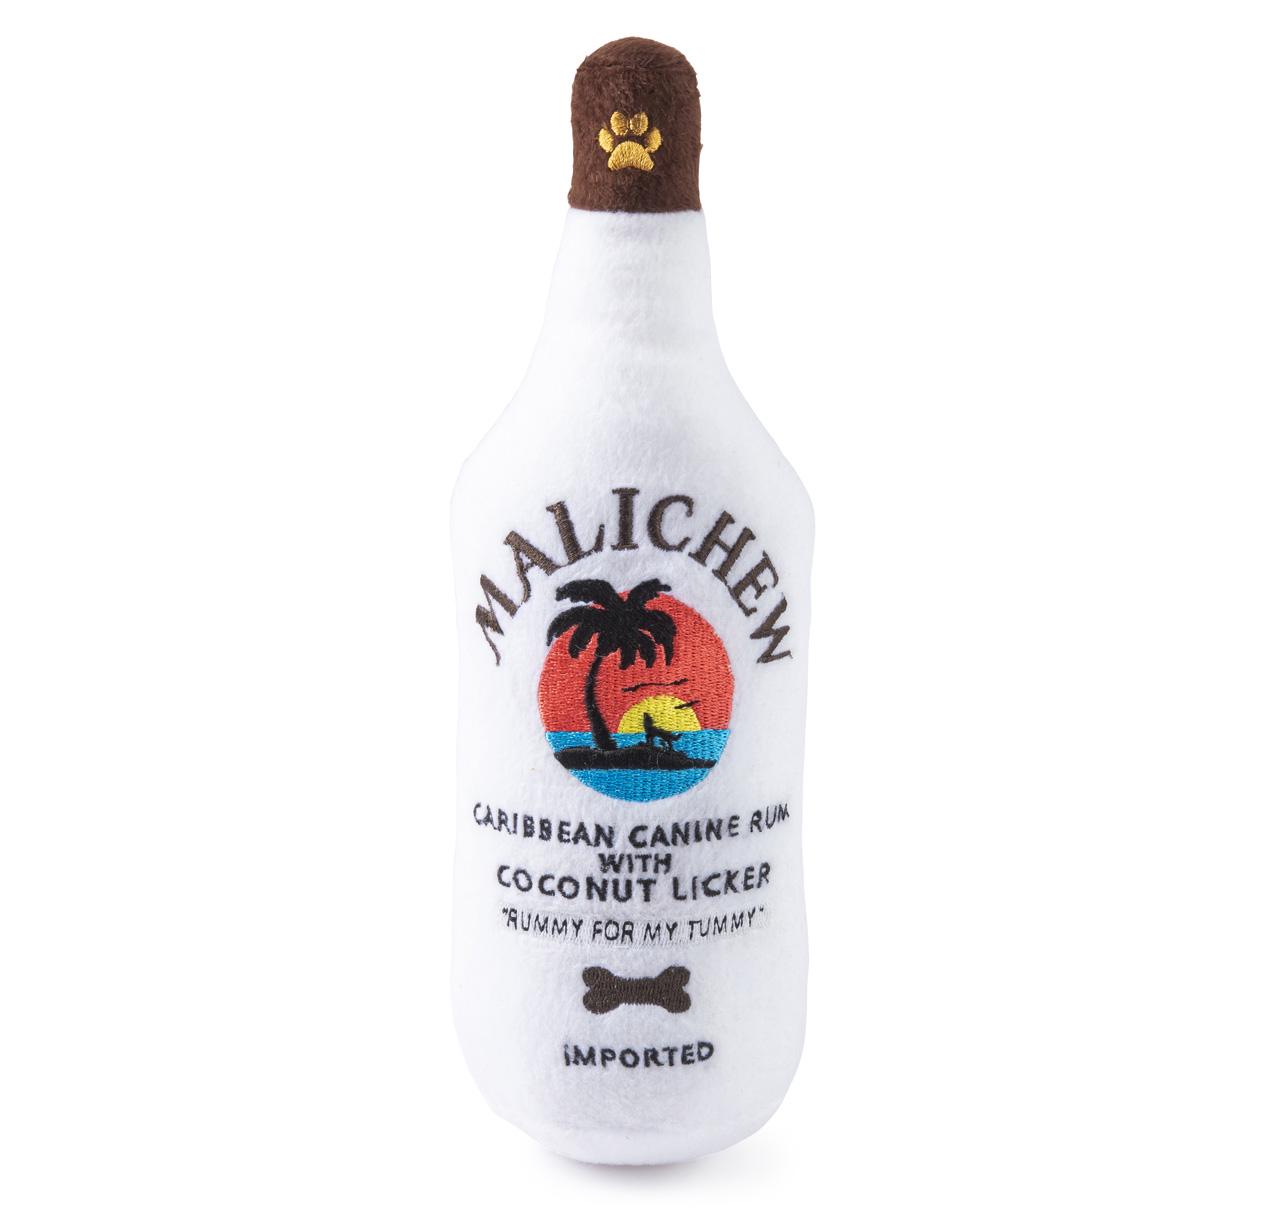 Malichew Rum - Scarvesnthangs